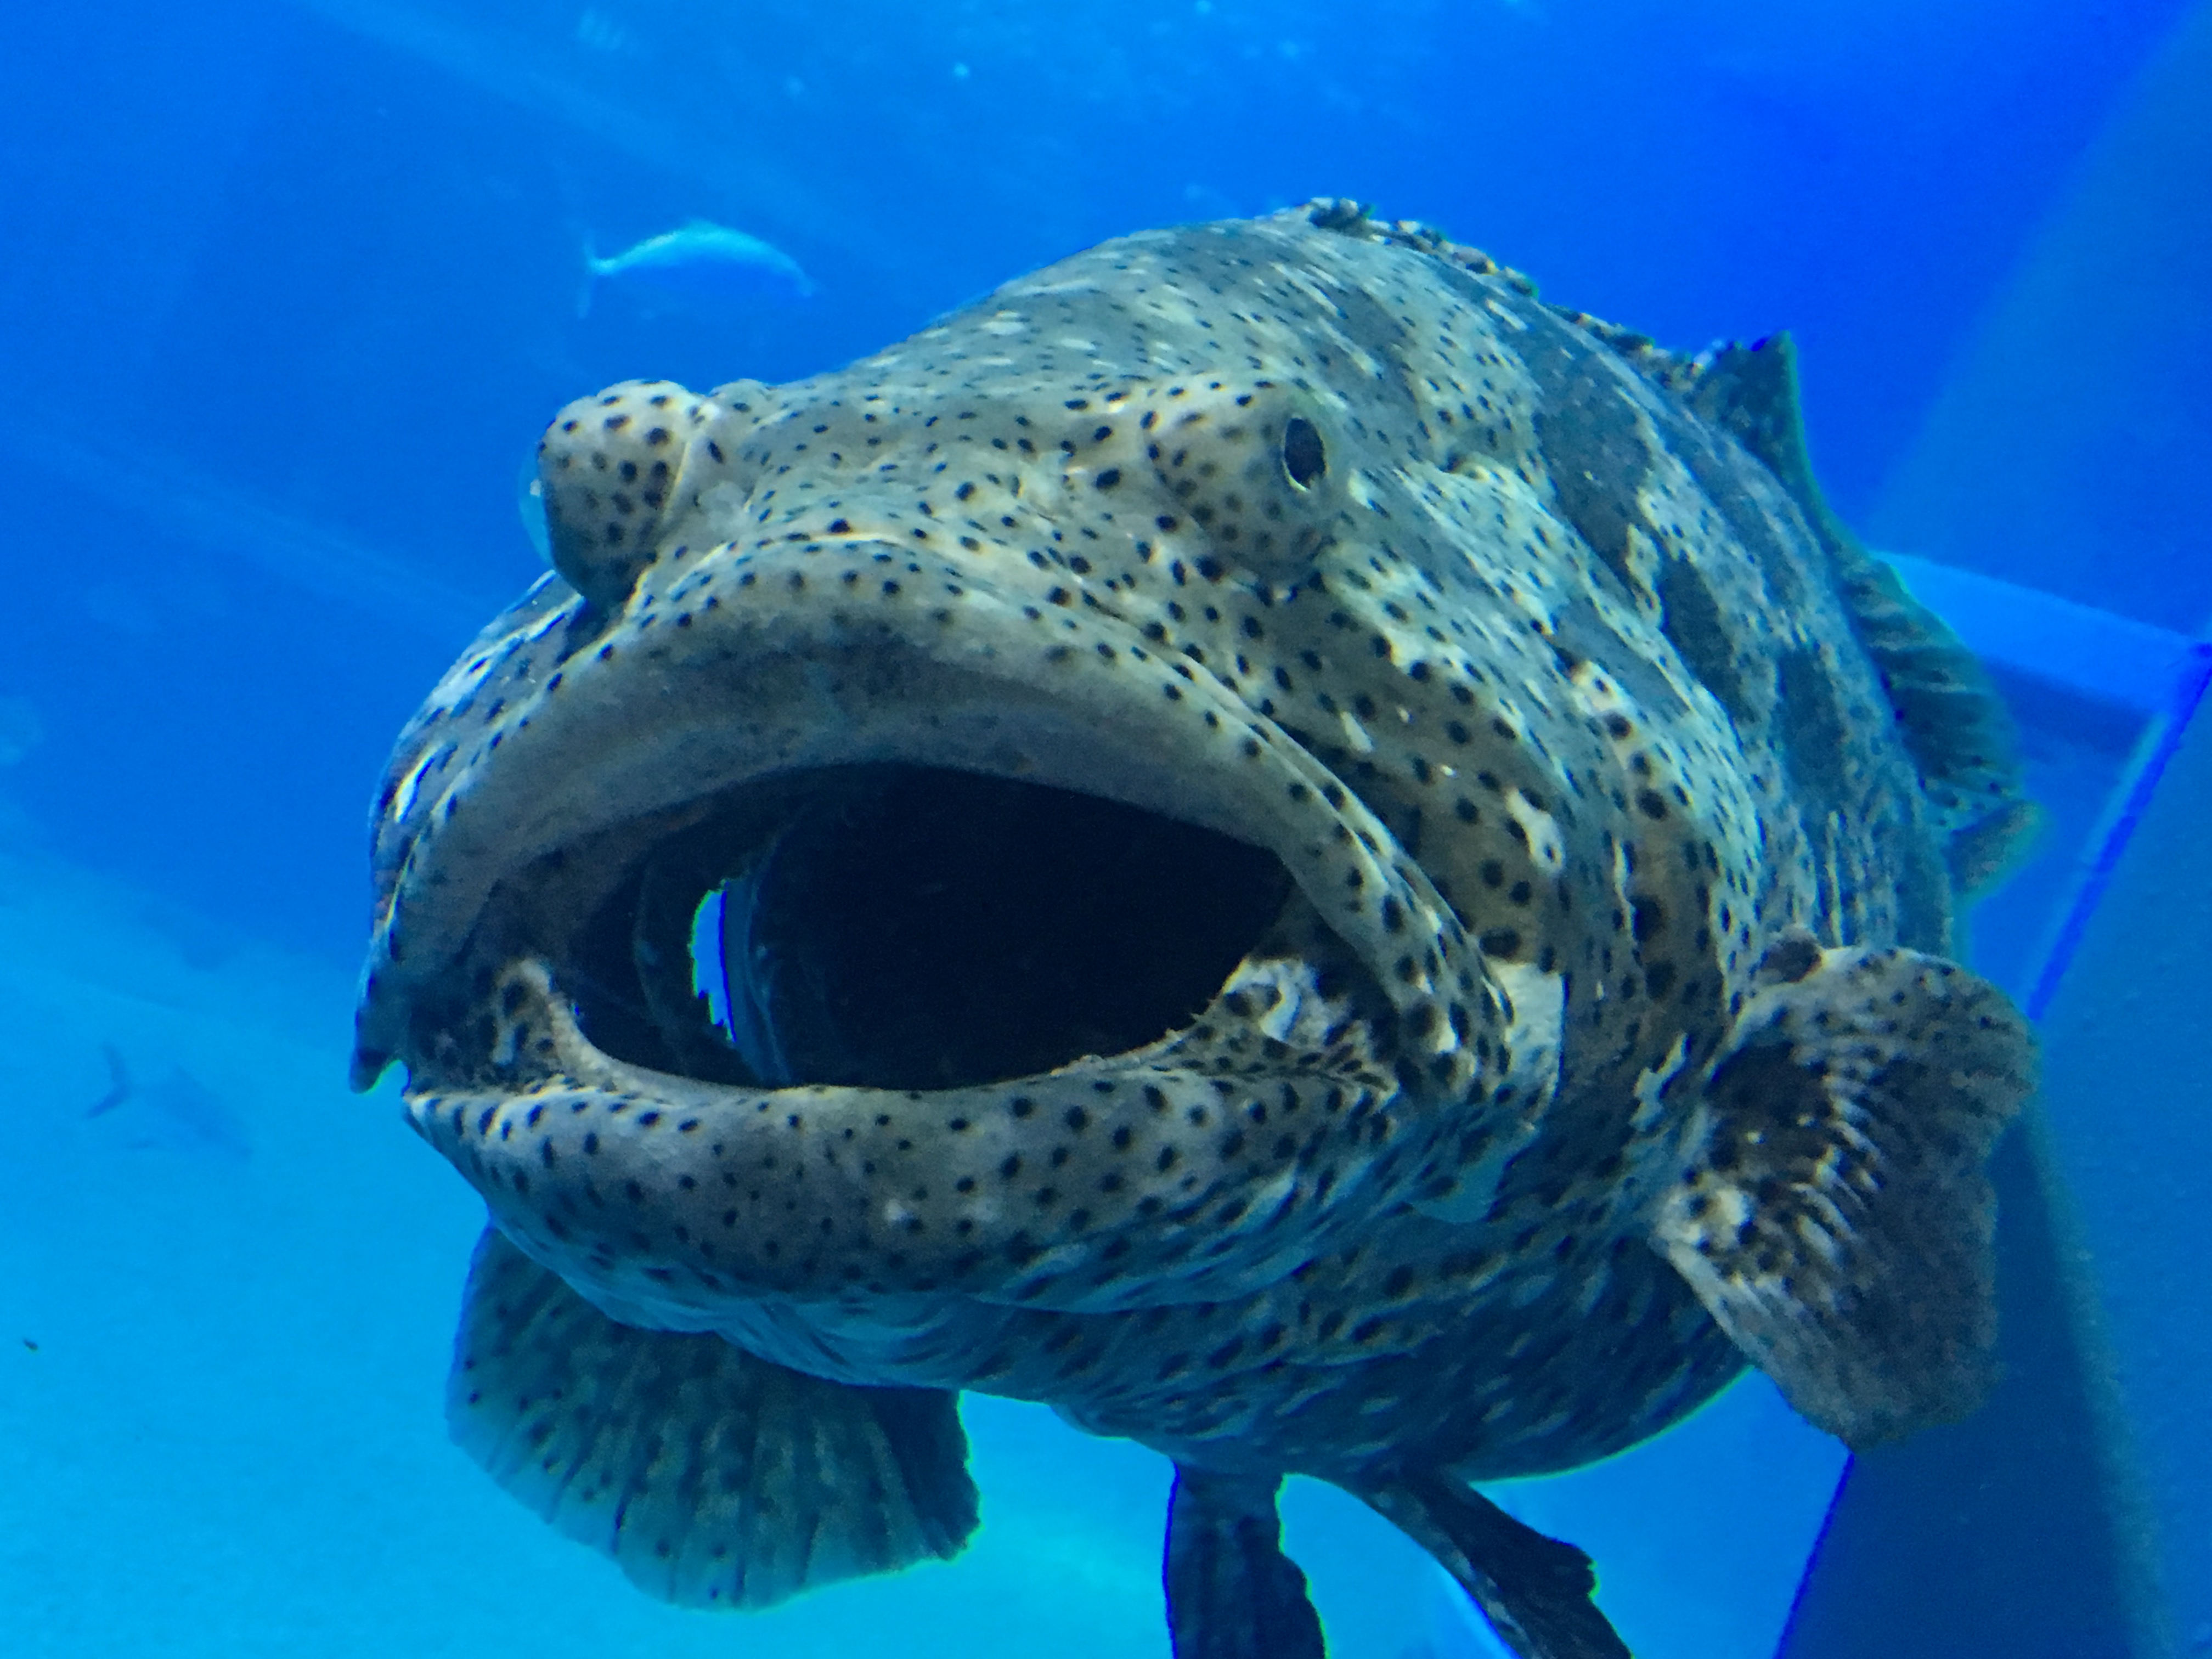 unusual large mouthed deep sea fish in aquarium tank 